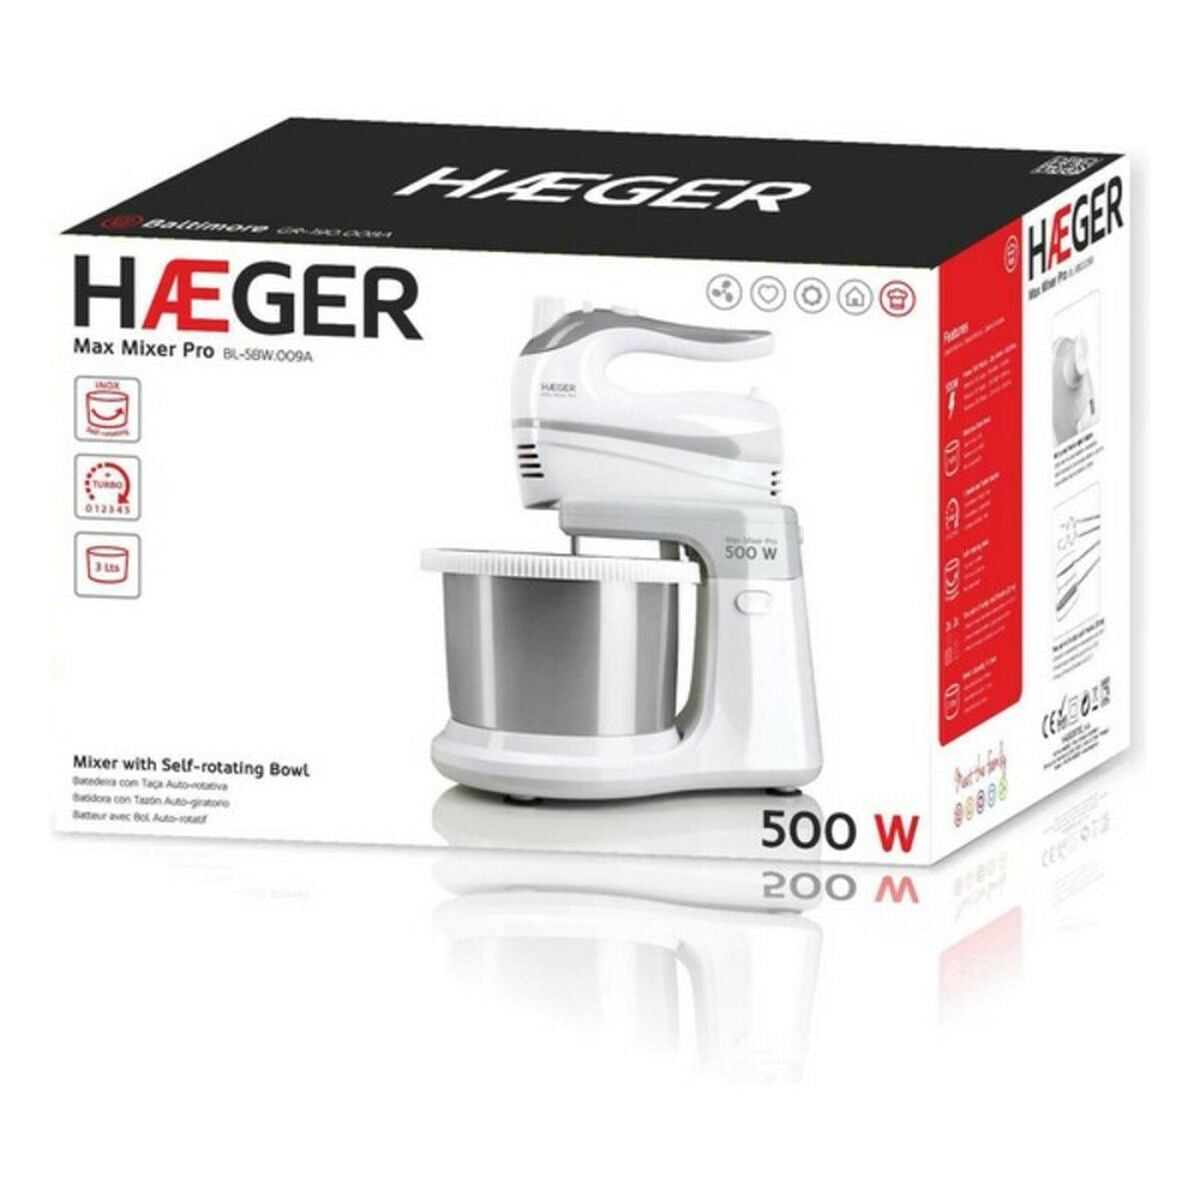 impastatrice mixer con ciotola Haeger Max Mixer Pro 2 L 500W